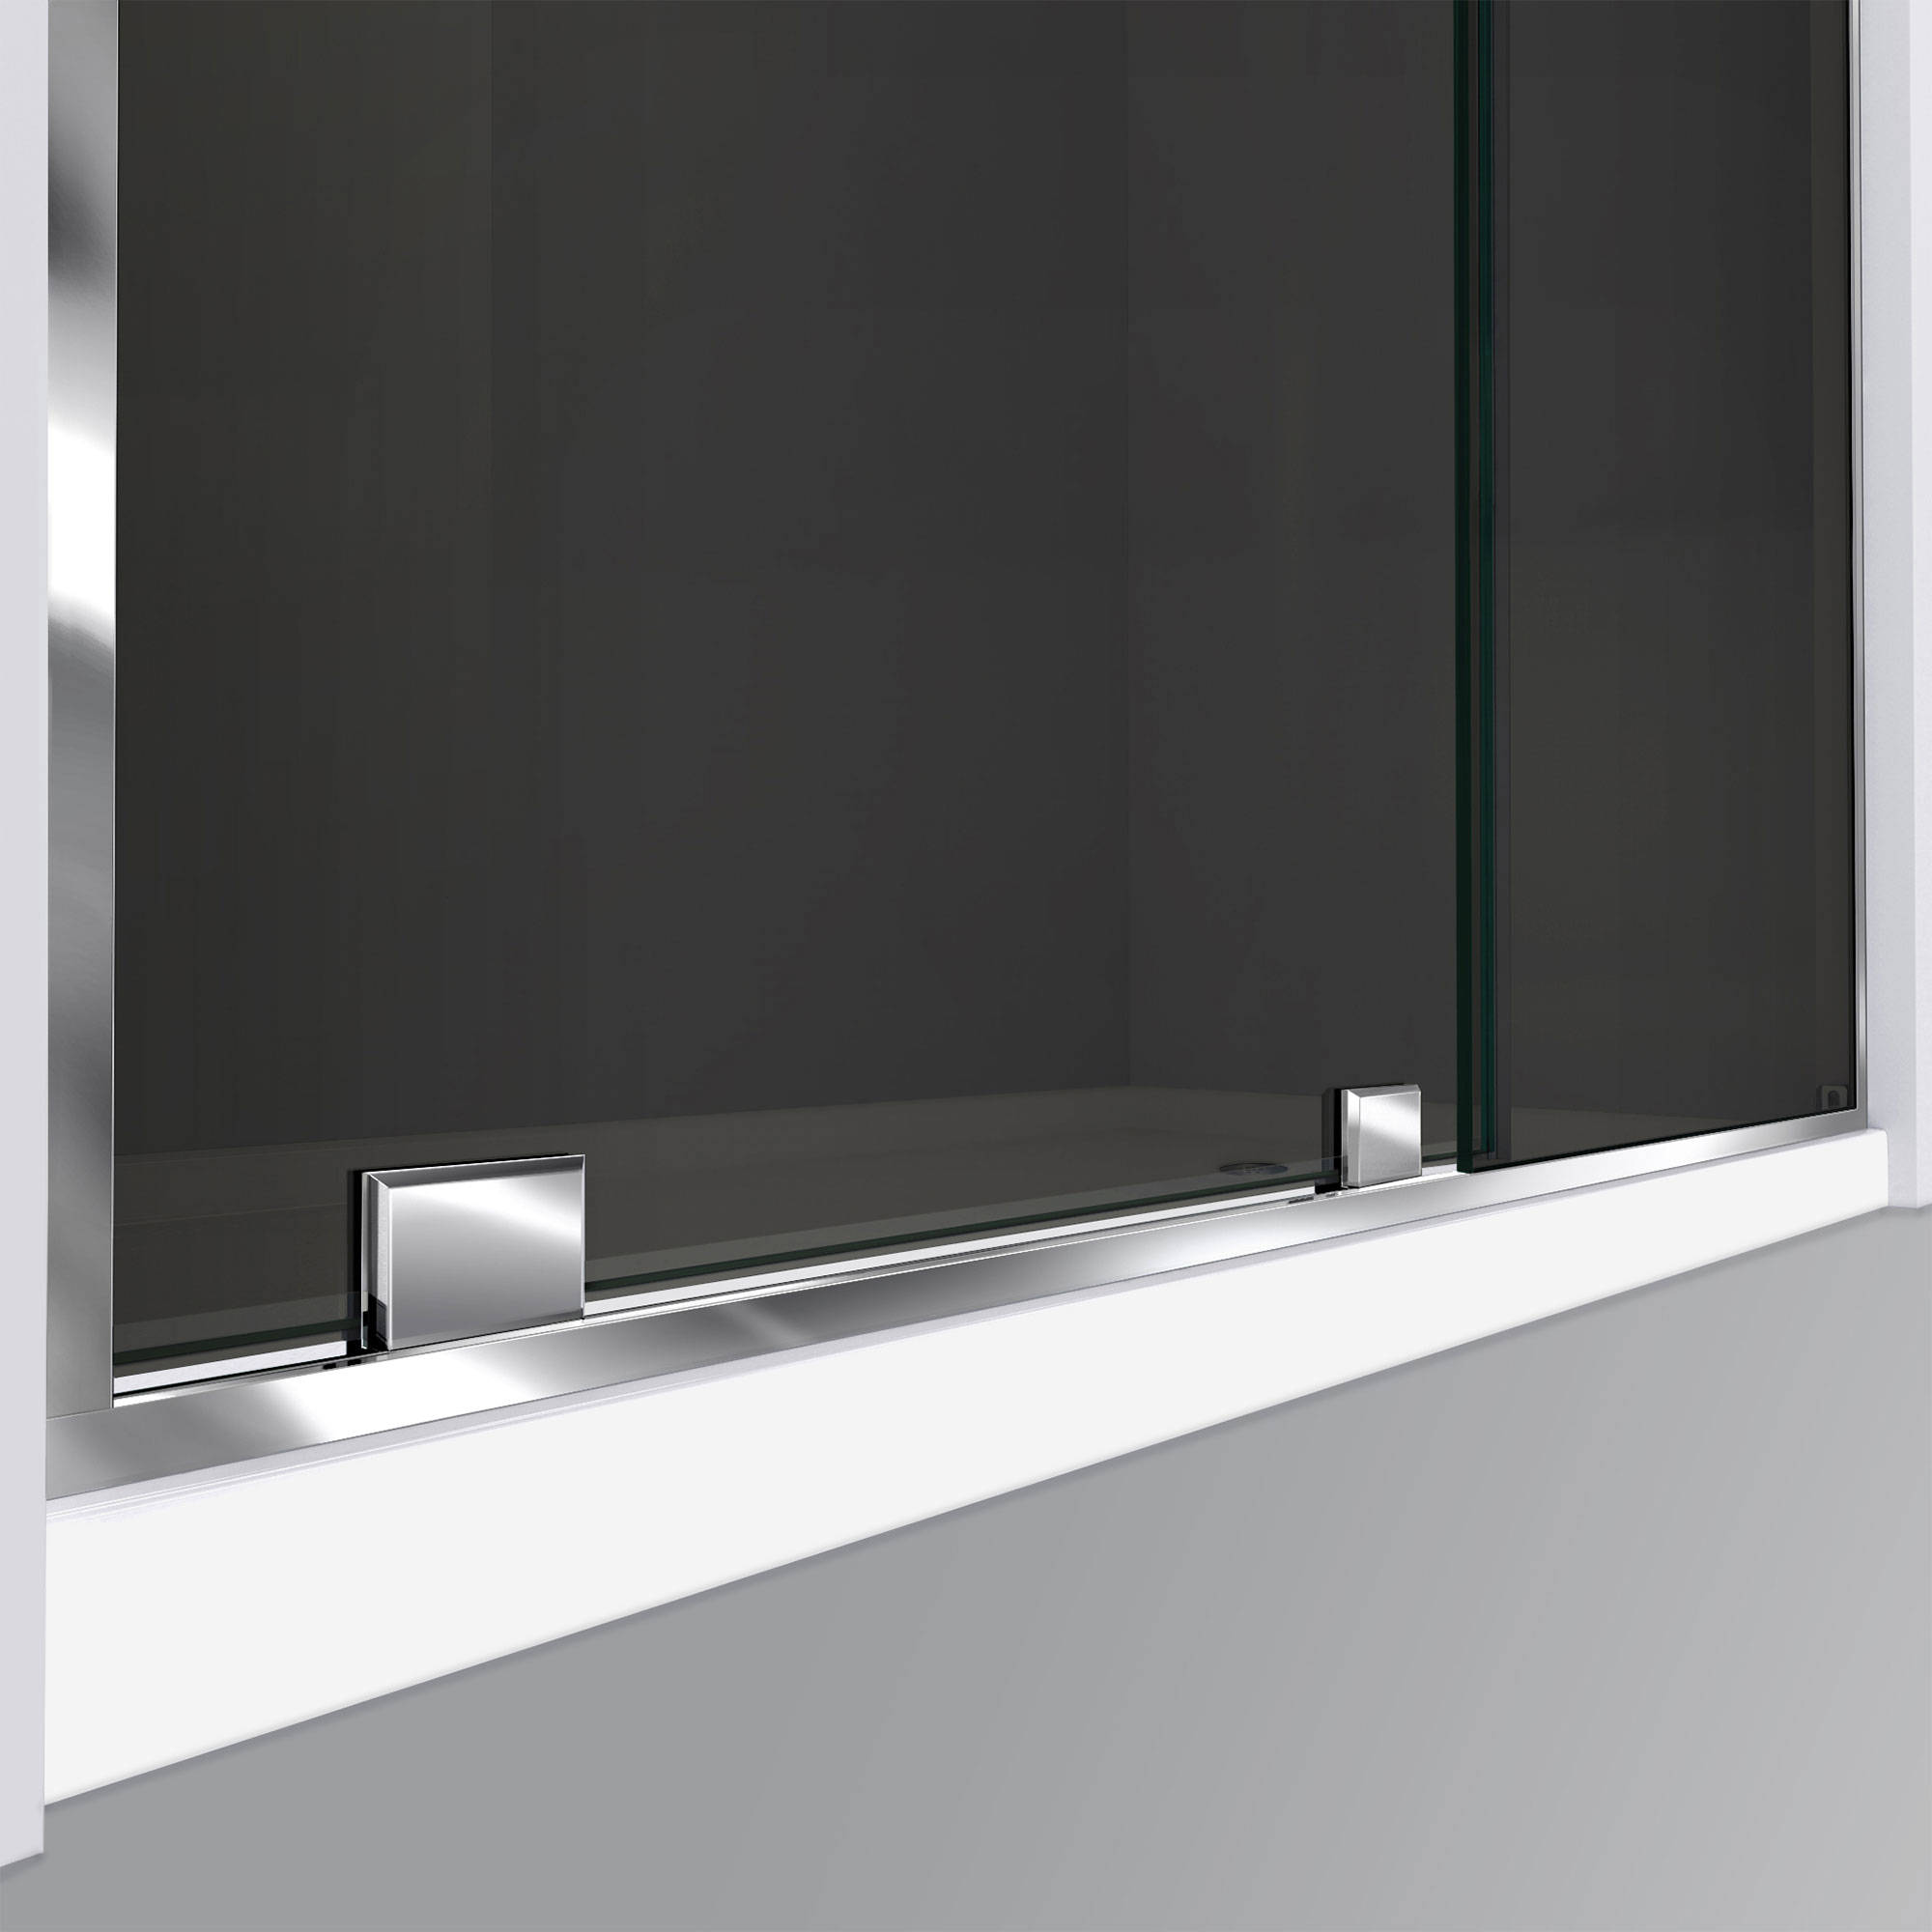 DreamLine Mirage-Z 44-48 in. W x 72 in. H Frameless Sliding Shower Door in Brushed Nickel